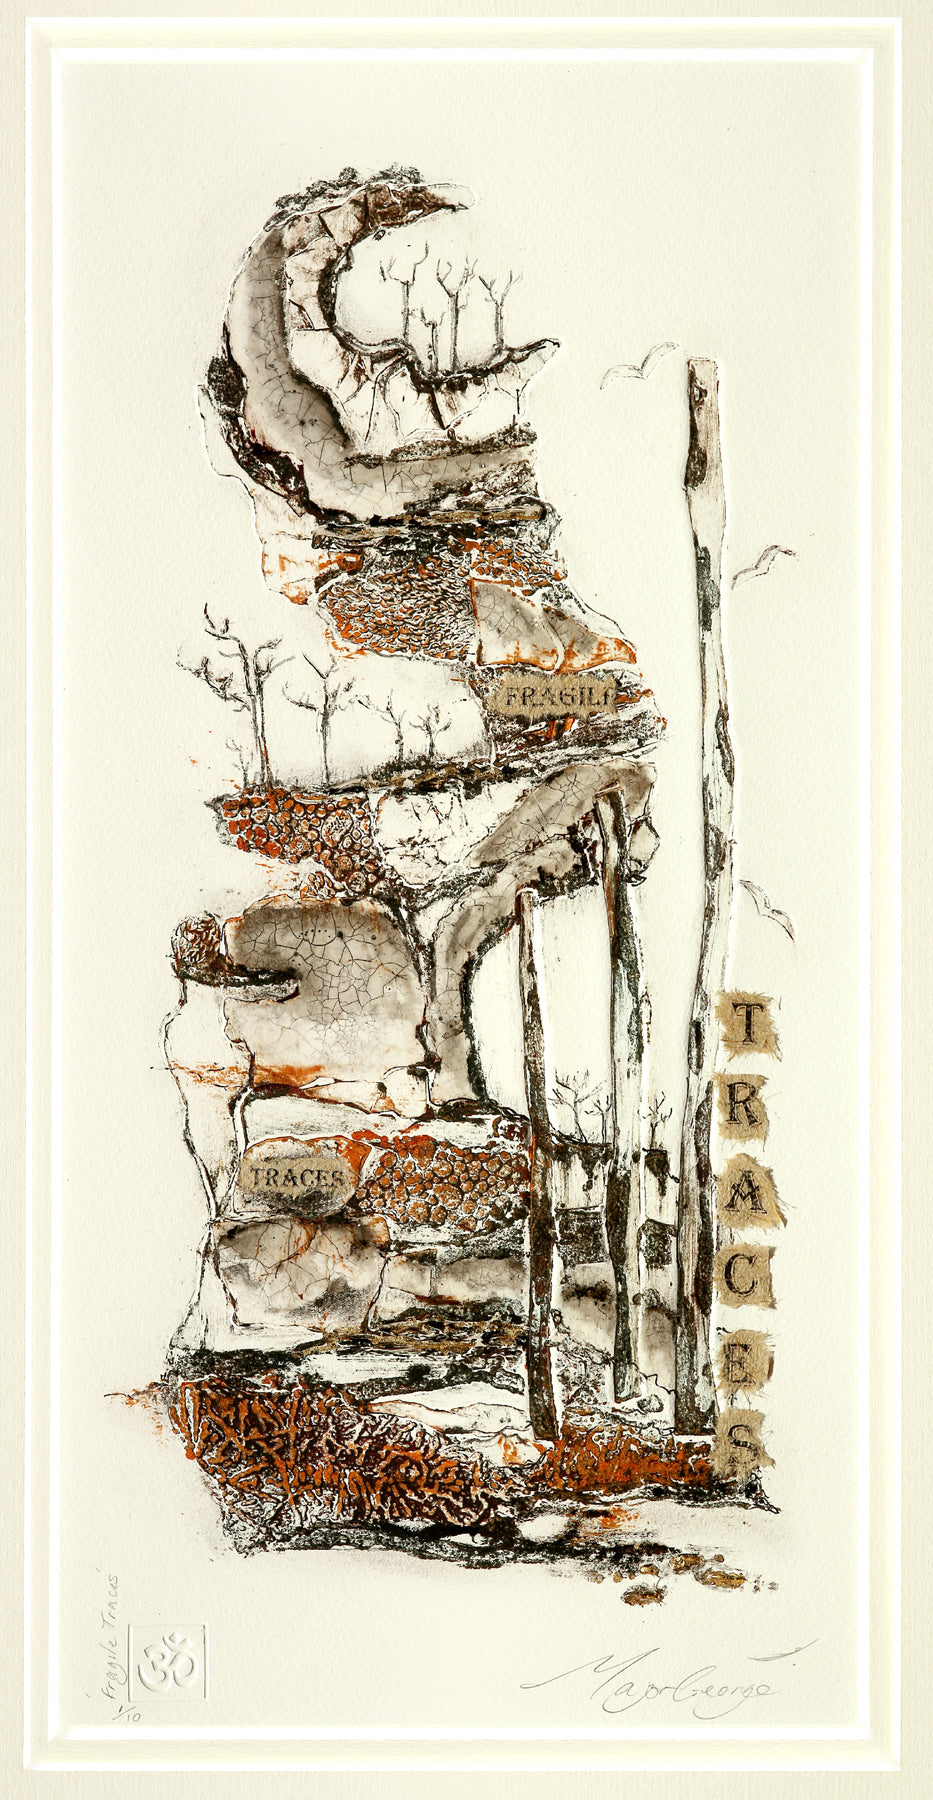 Fragile Traces by Kim Major-George